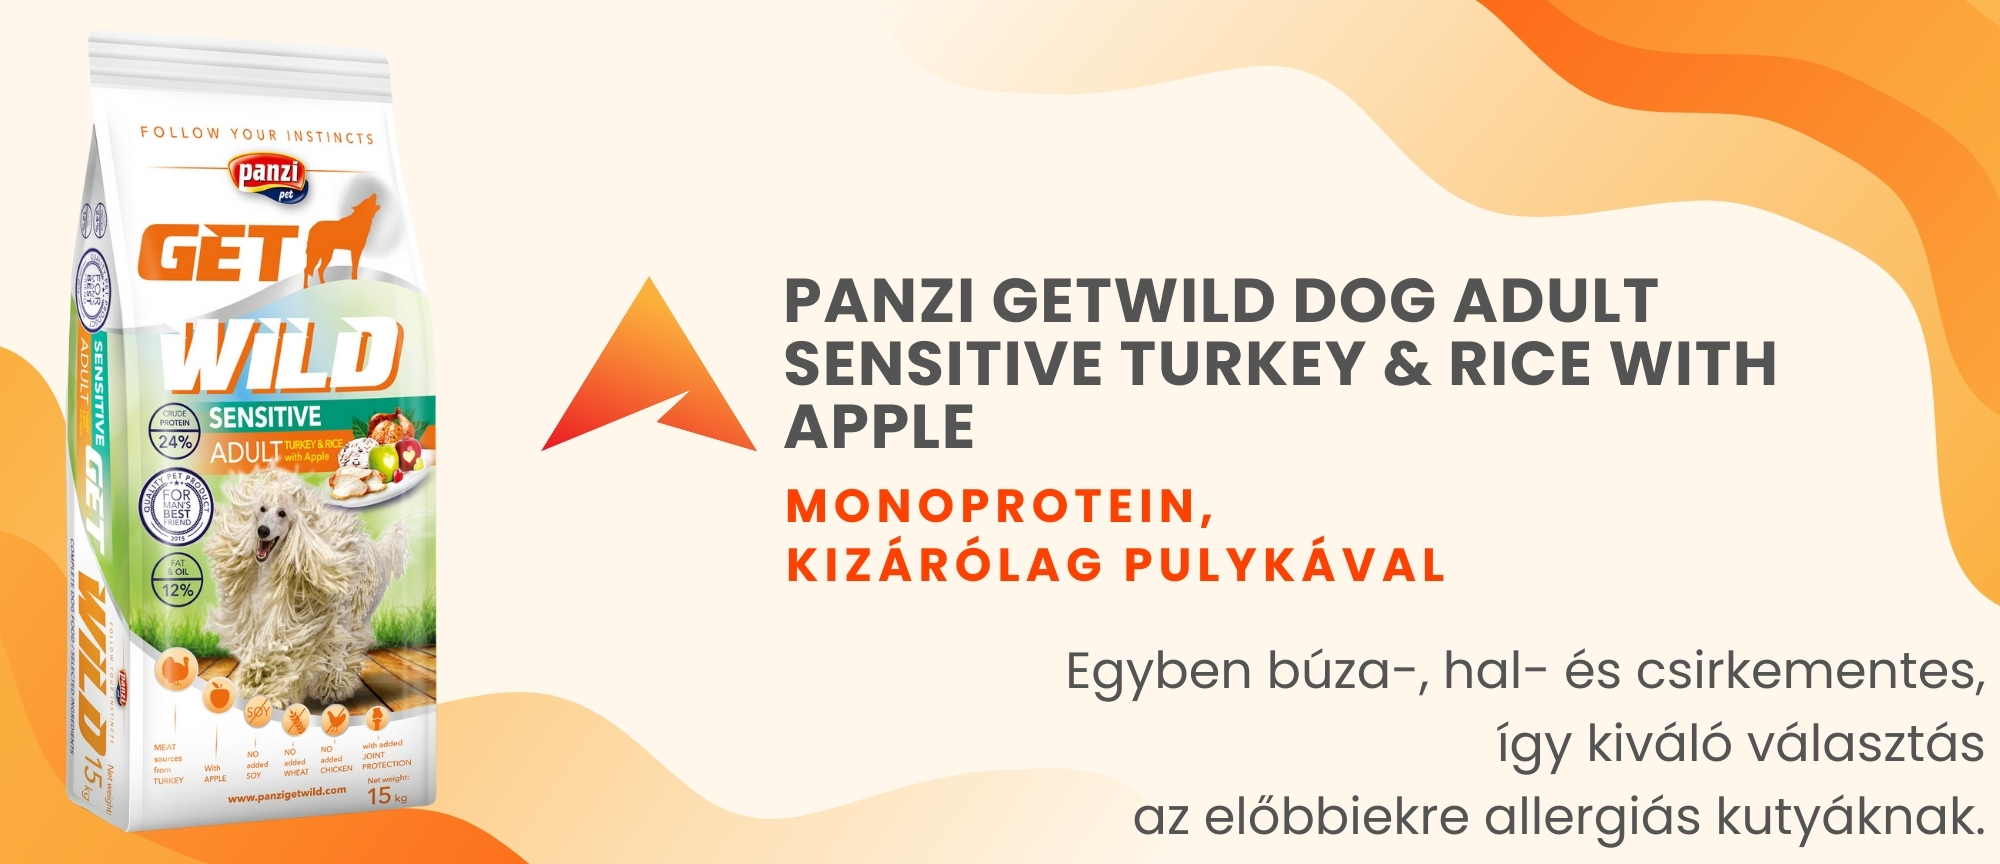 Panzi GetWild Dog Adult Sensitive Turkey & Rice with Apple - zoom